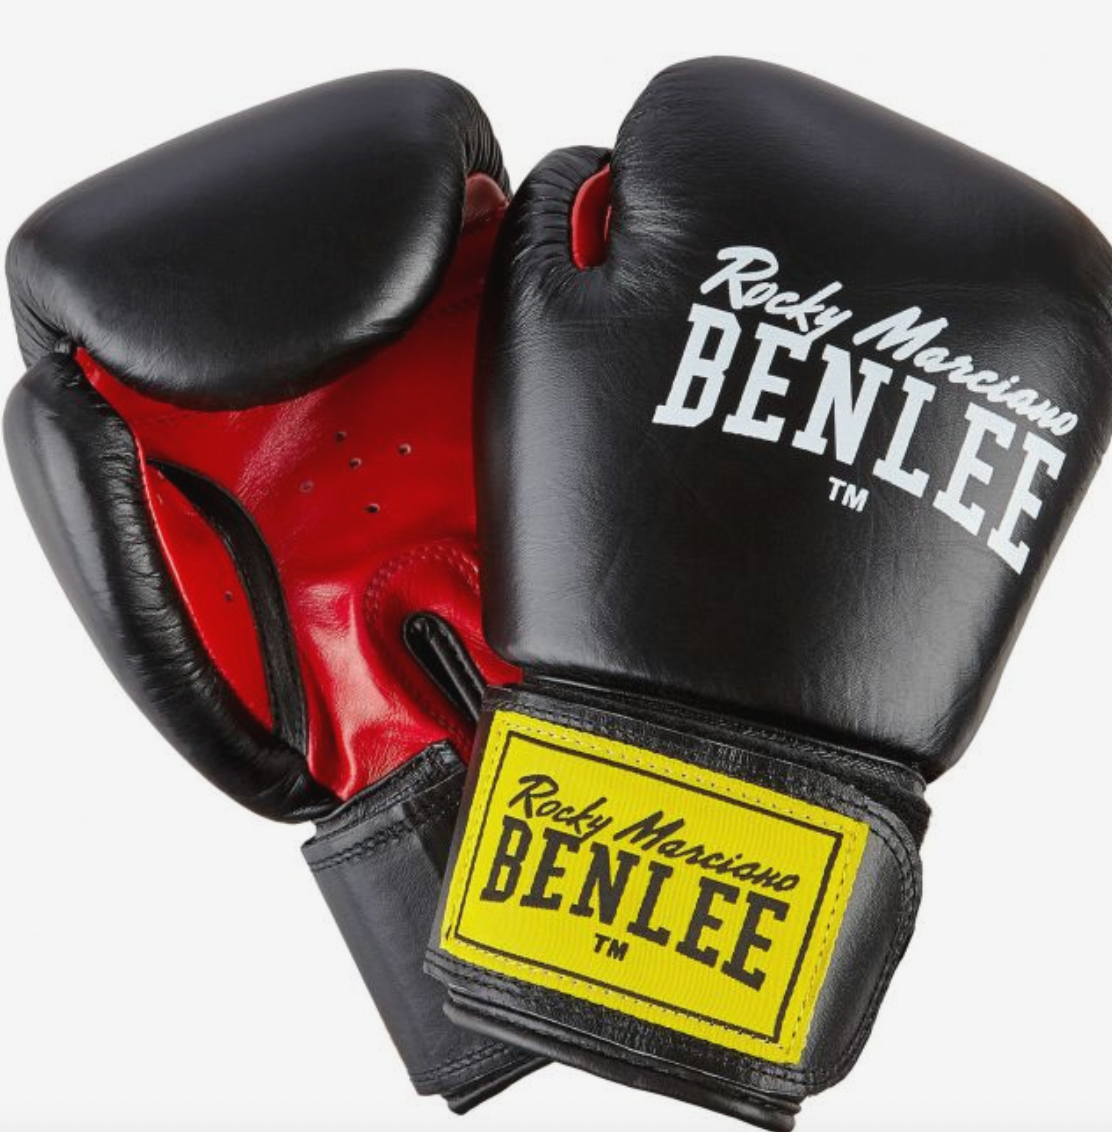 Benlee Boxhandschuhe "Fighter"